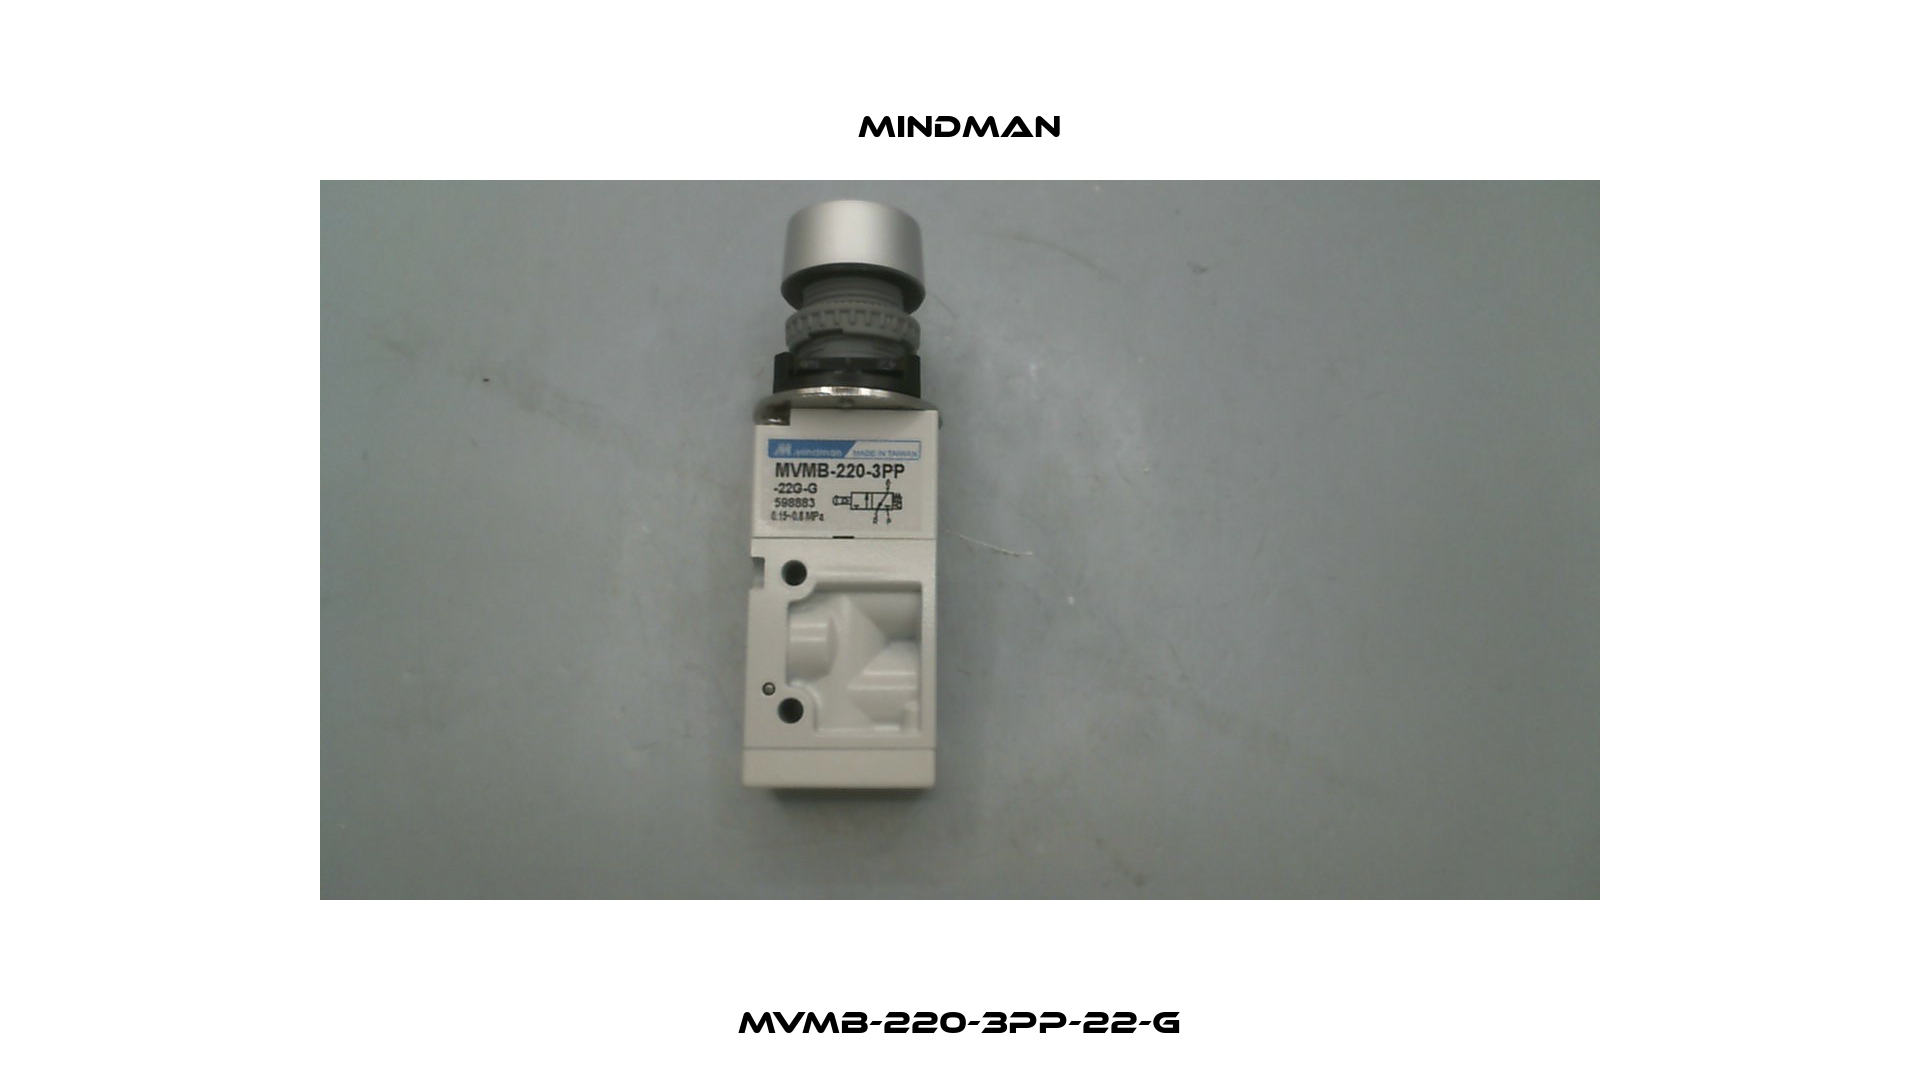 MVMB-220-3PP-22-G Mindman